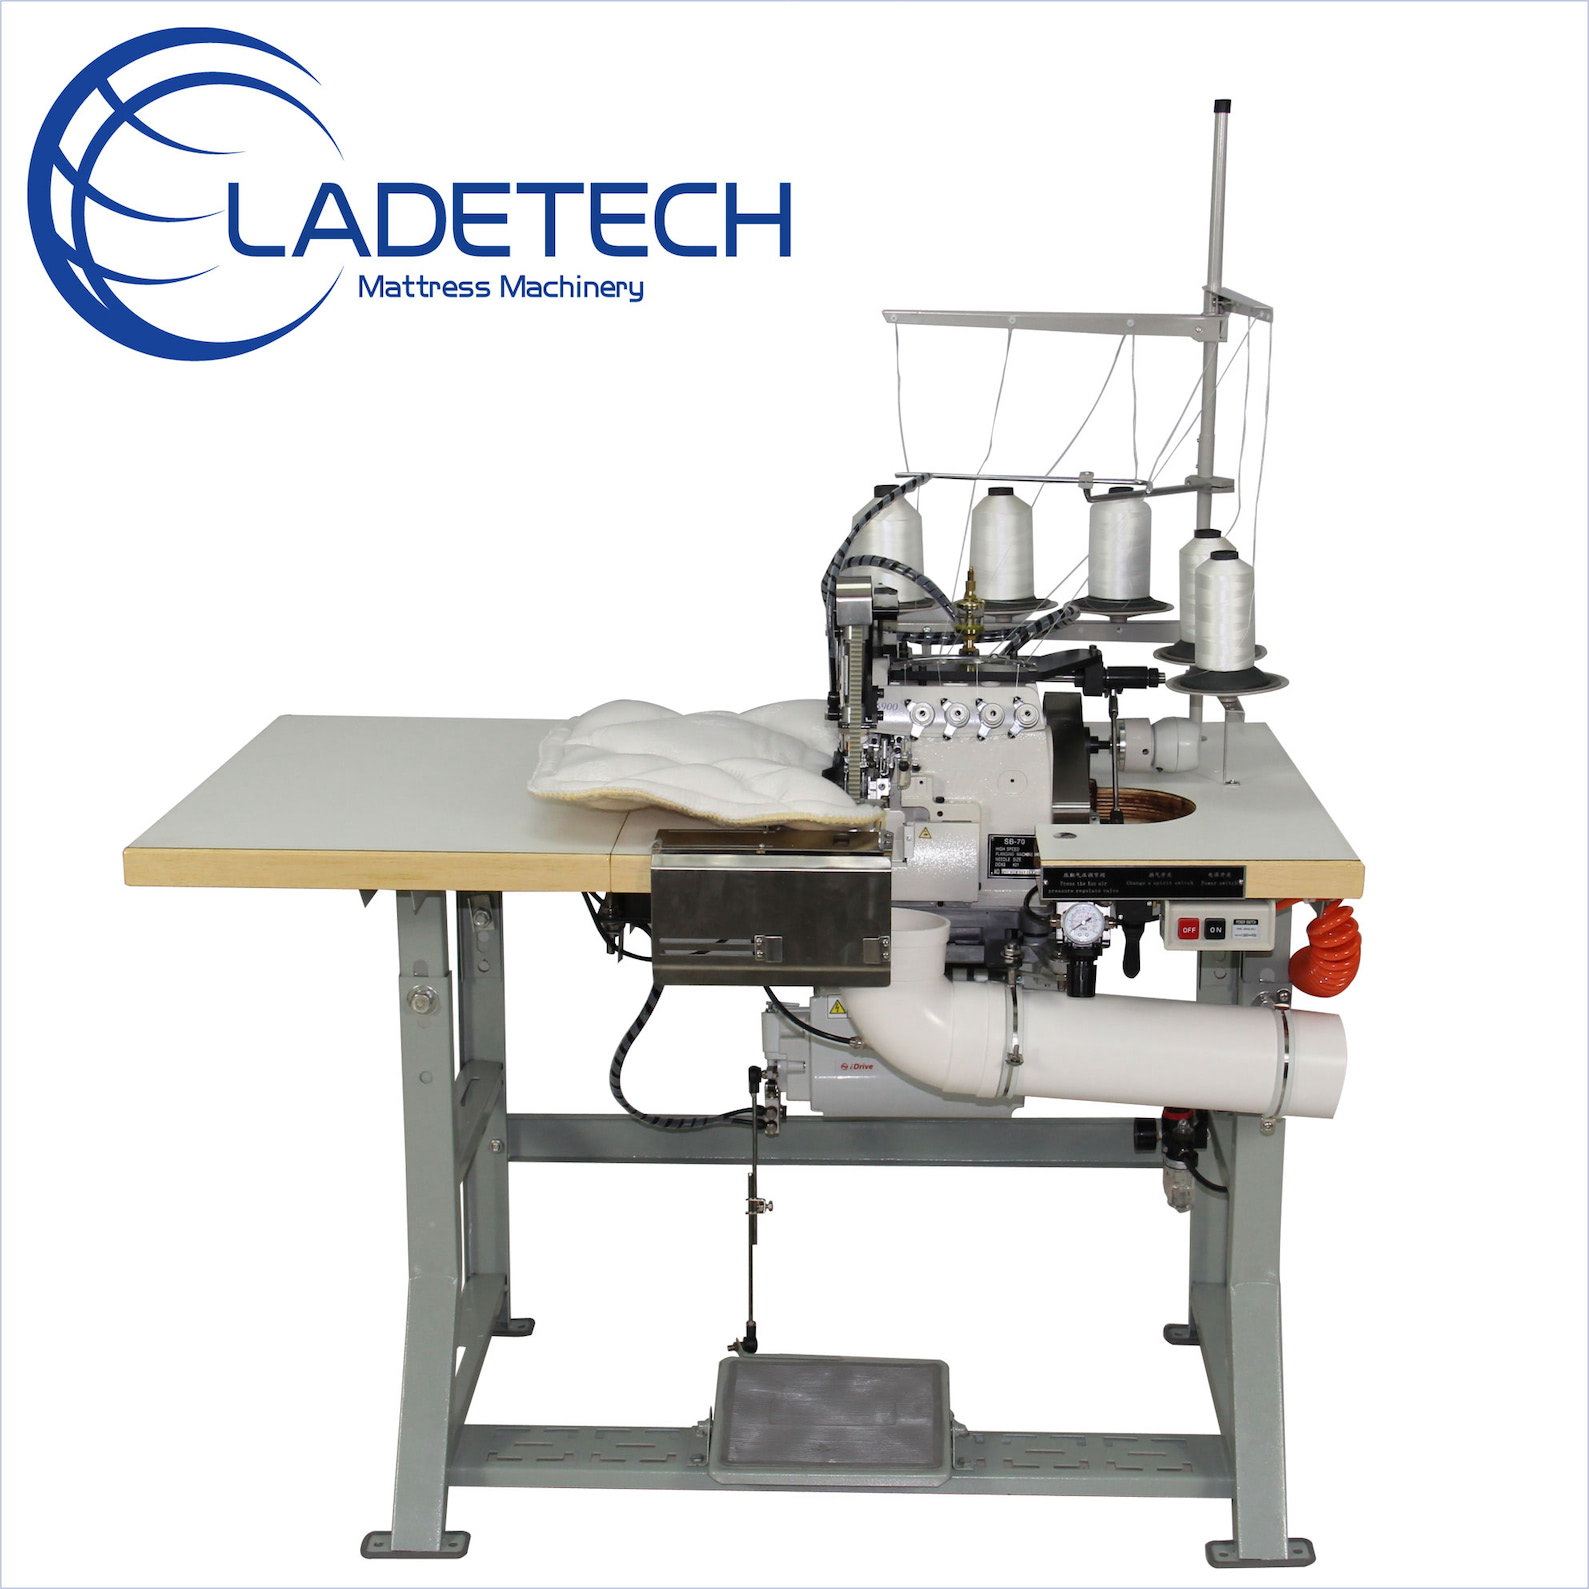 LDT-FG07 Heavy Duty Mattress Flanging Machine - Ladetech Mattress Machine